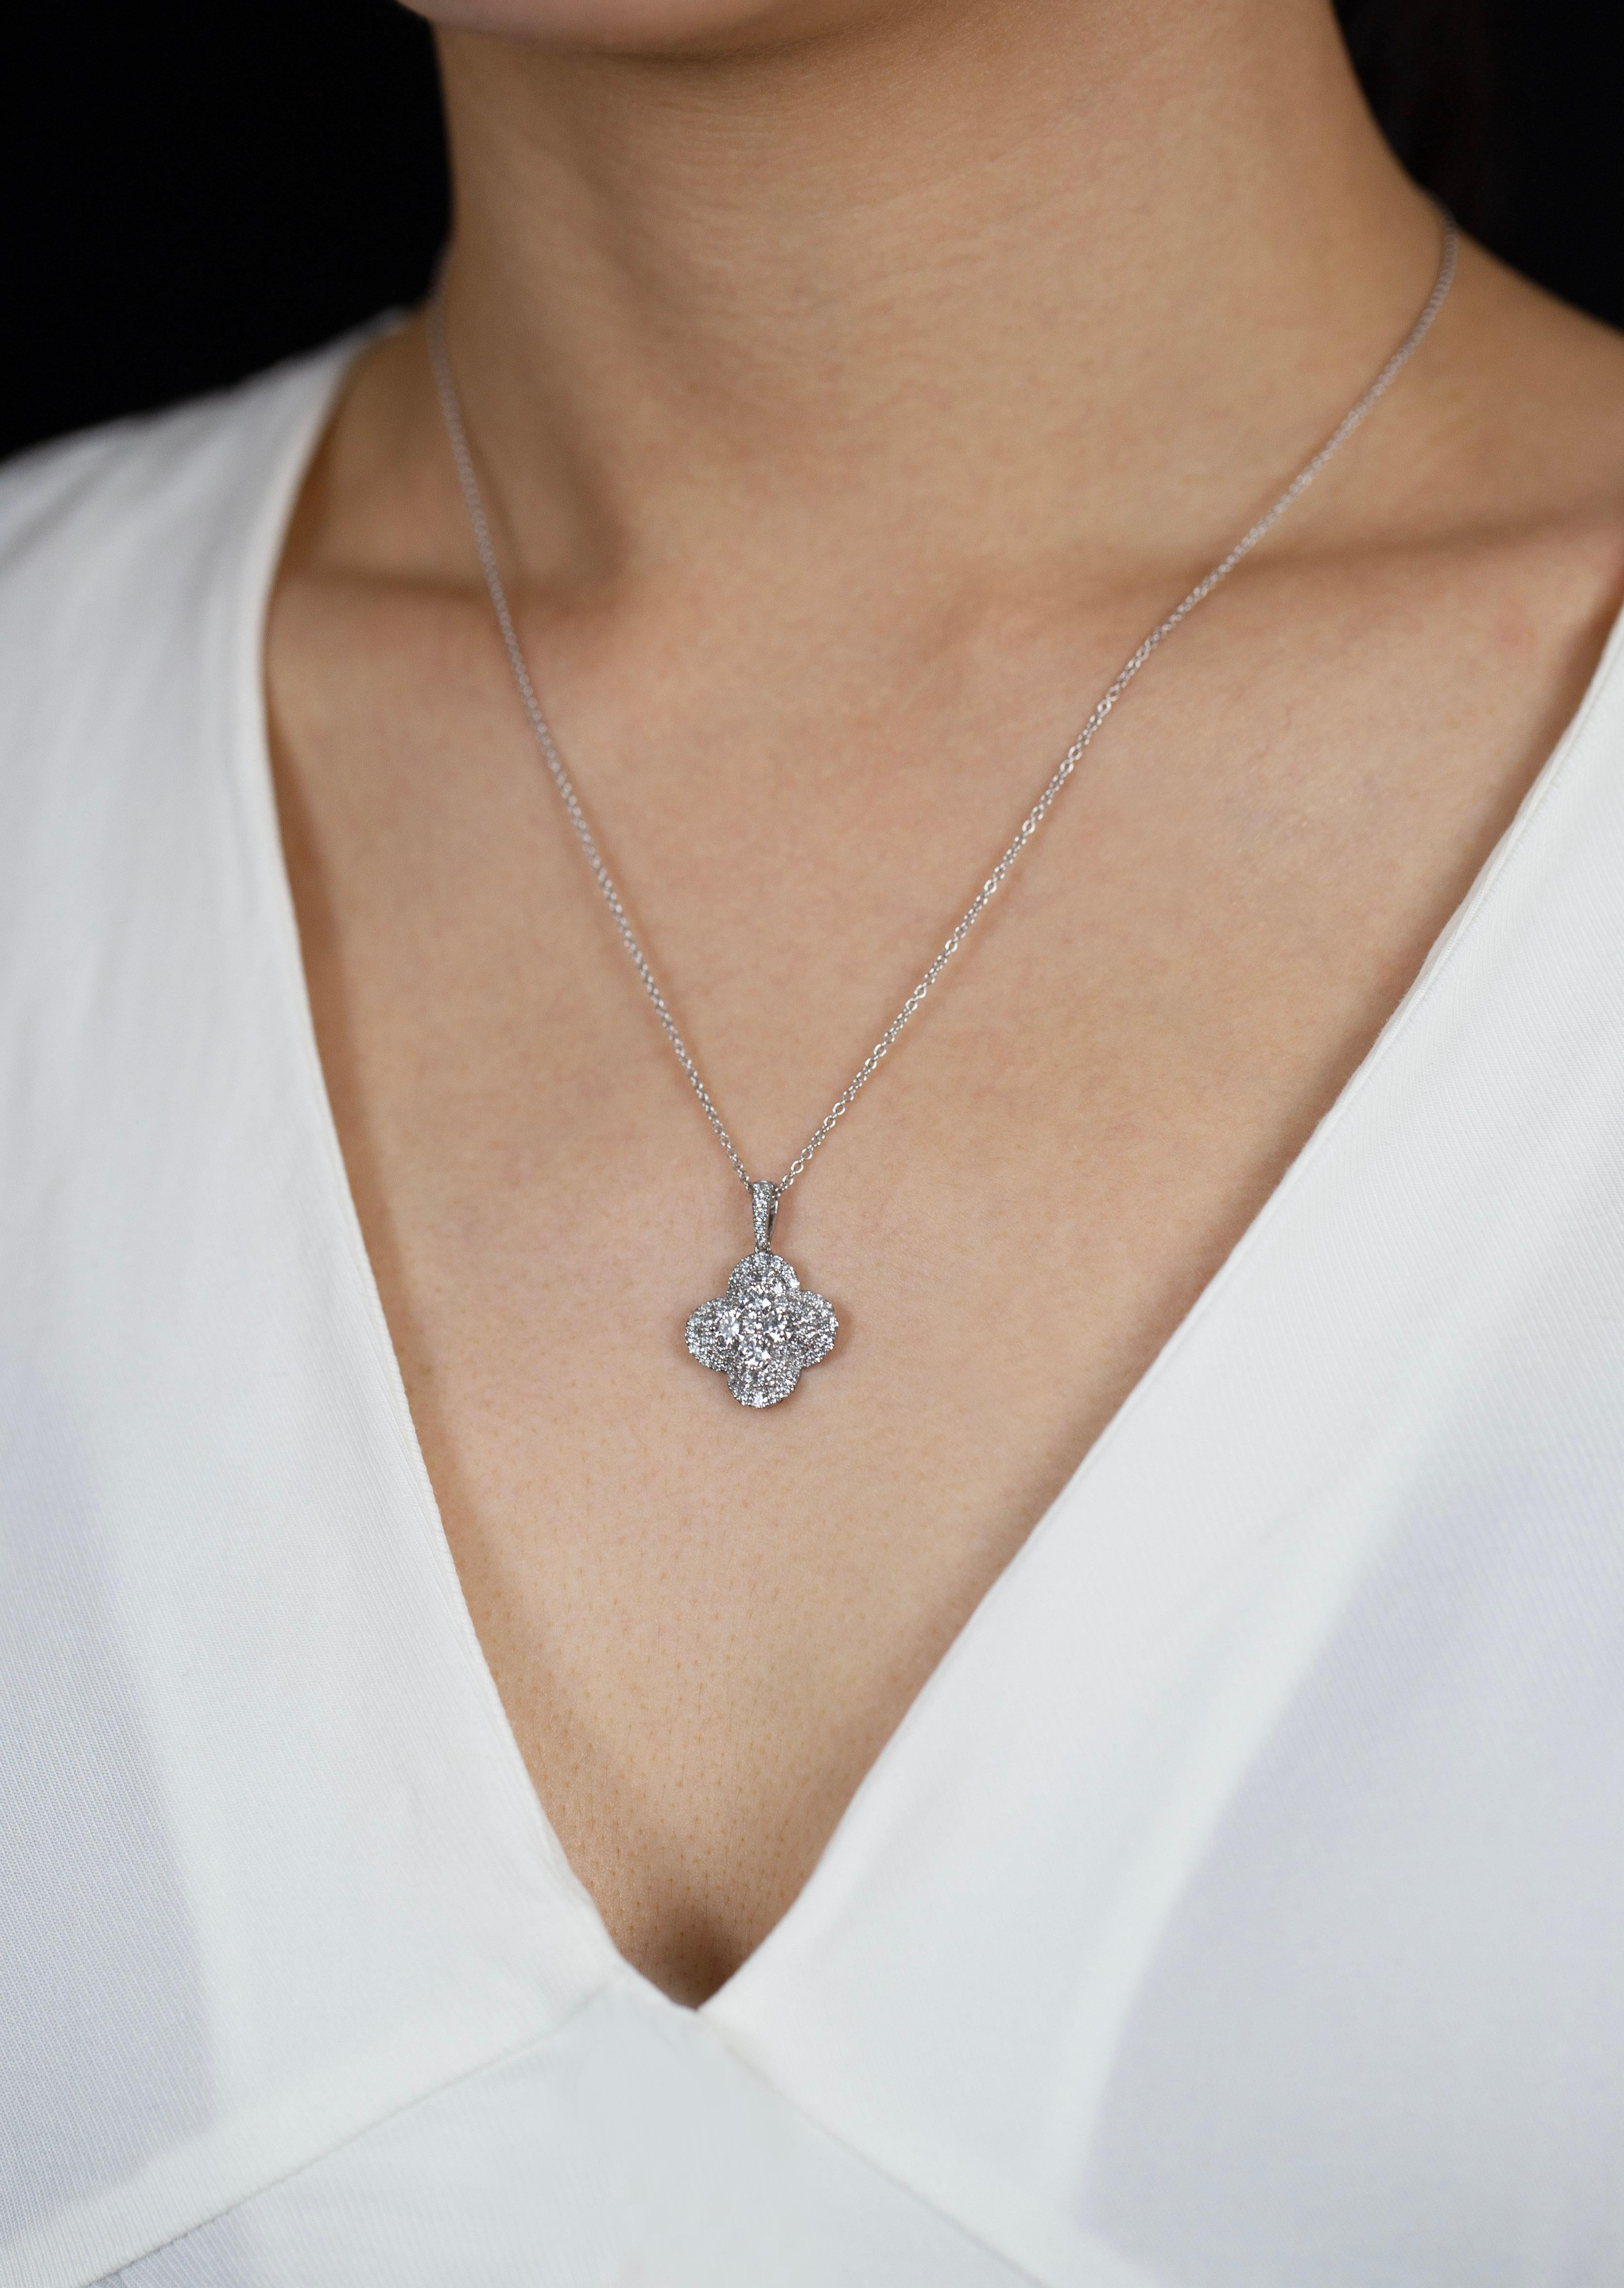 Contemporary Roman Malakov 1.57 Carats Total Round Cut Diamond Clover Shape Pendant Necklace For Sale